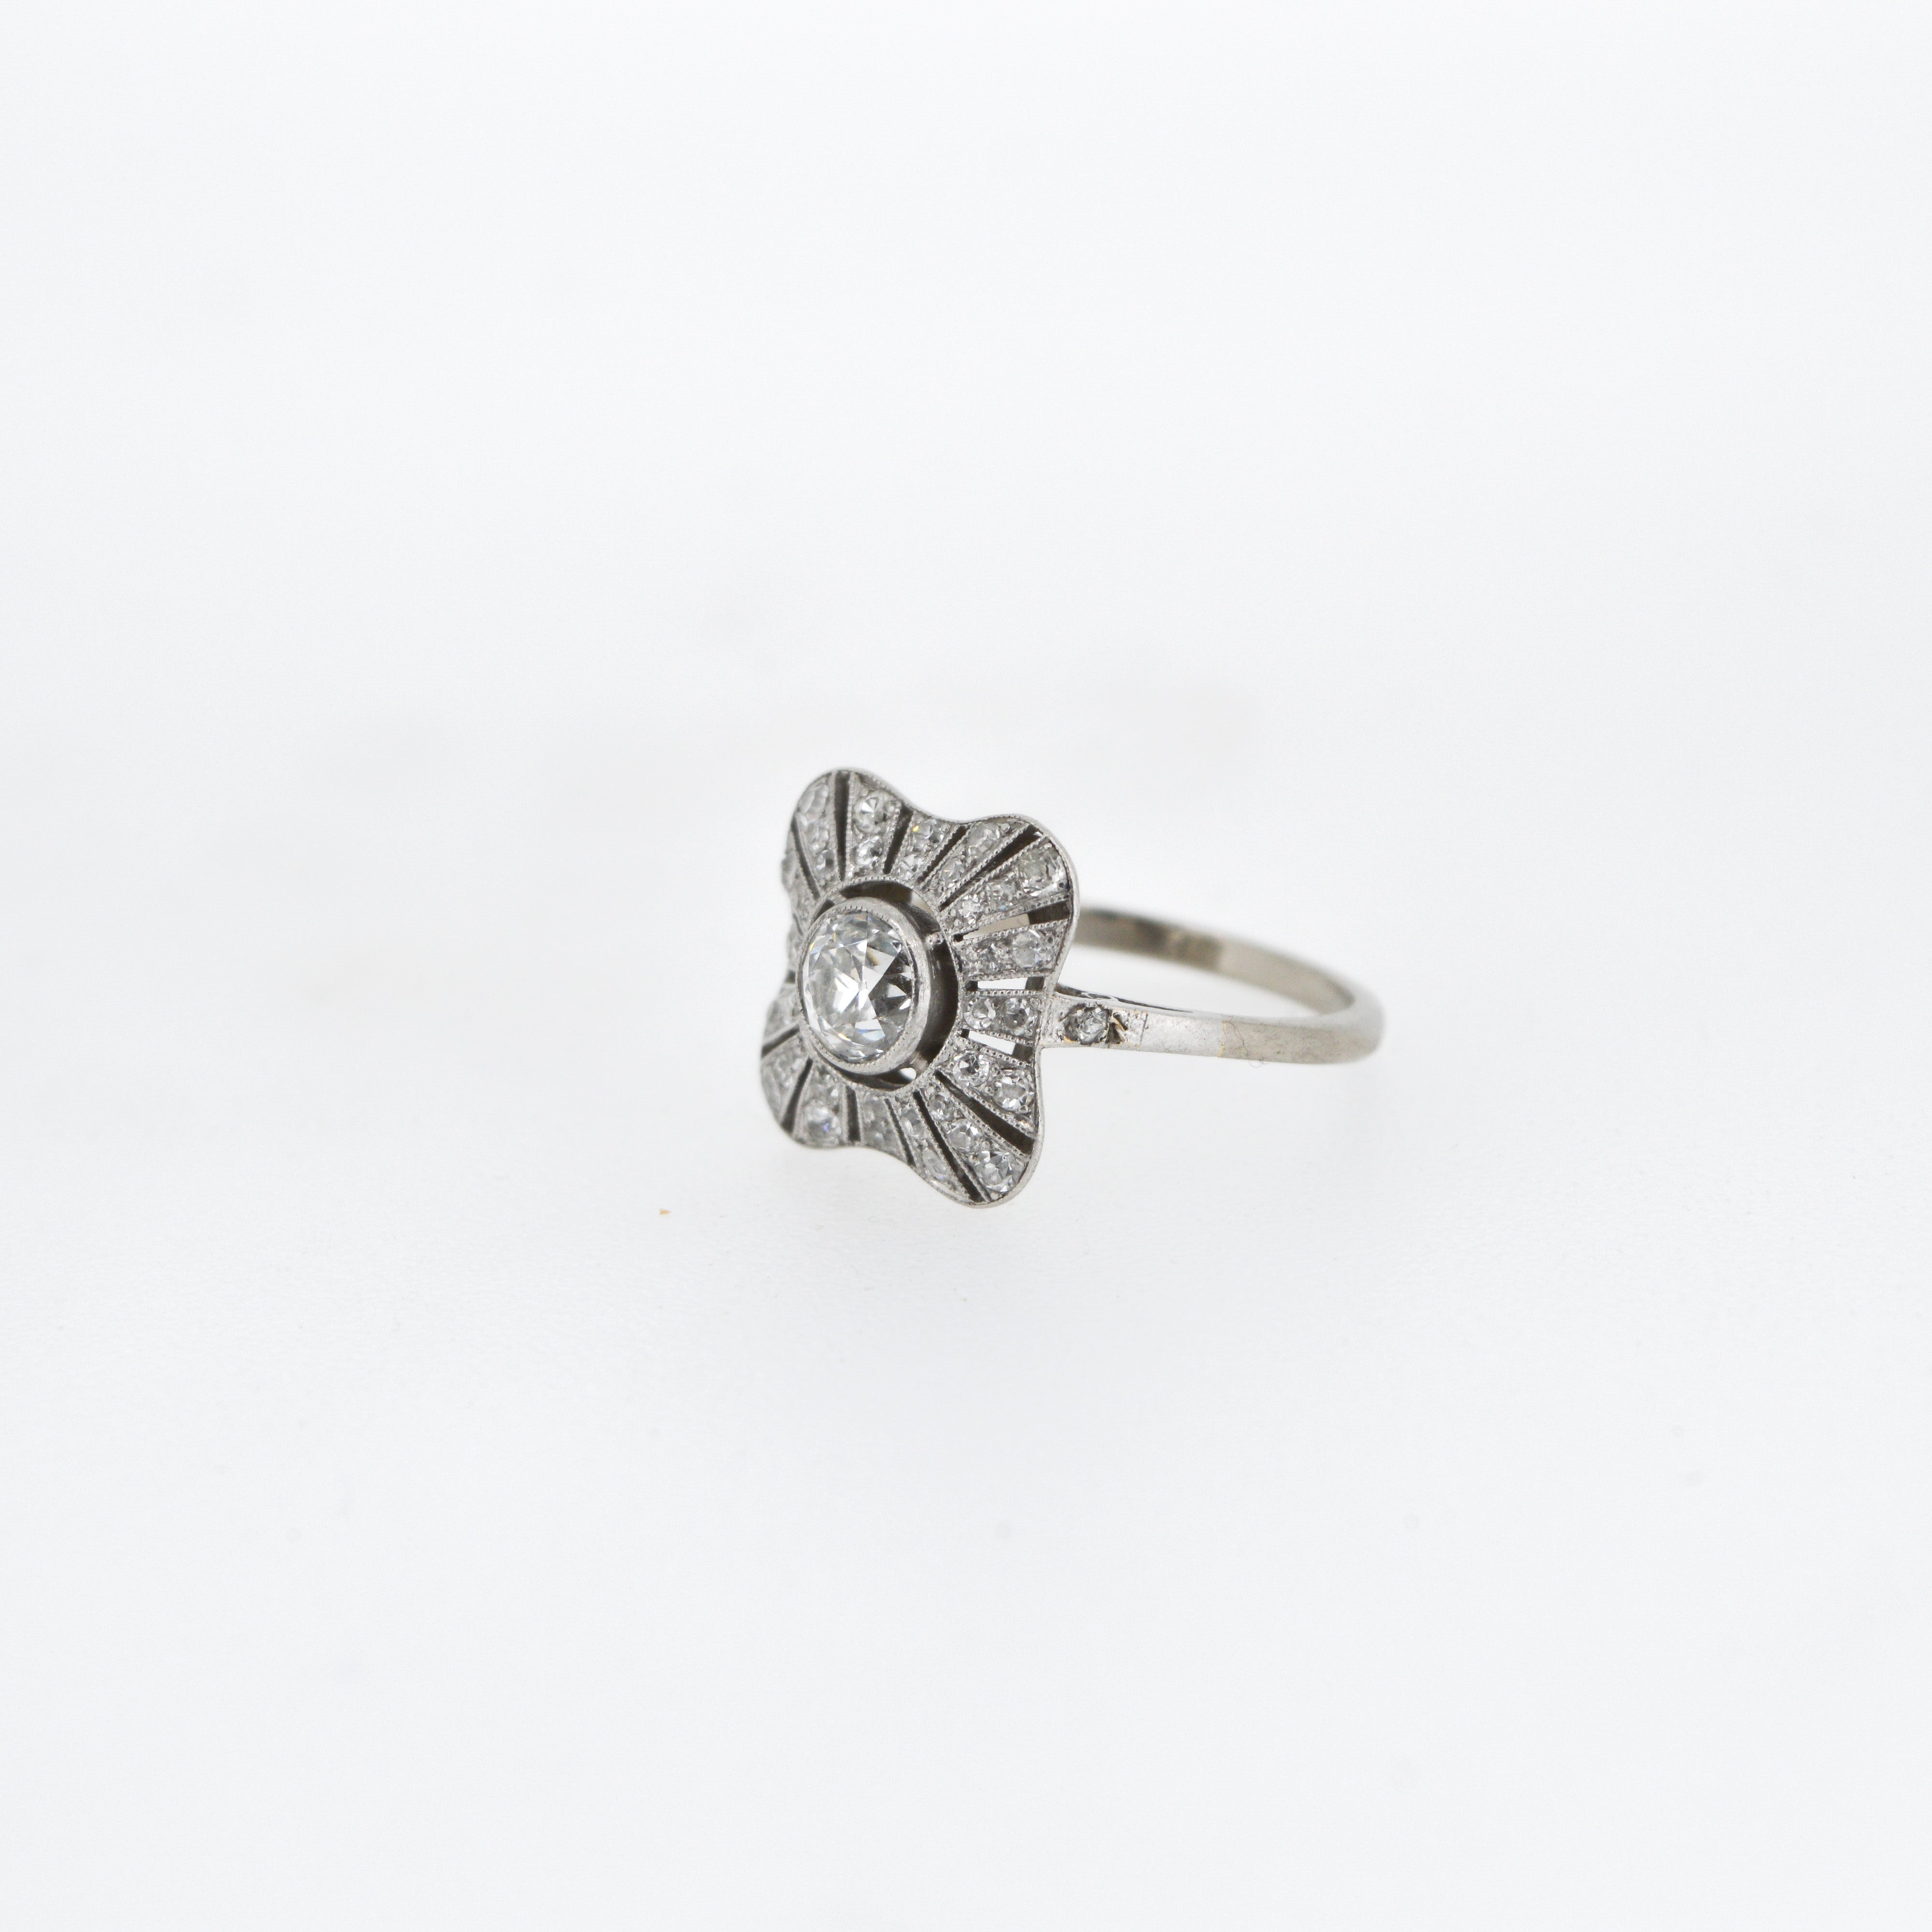 Unique Art Deco 1920's Diamond Engagement Ring